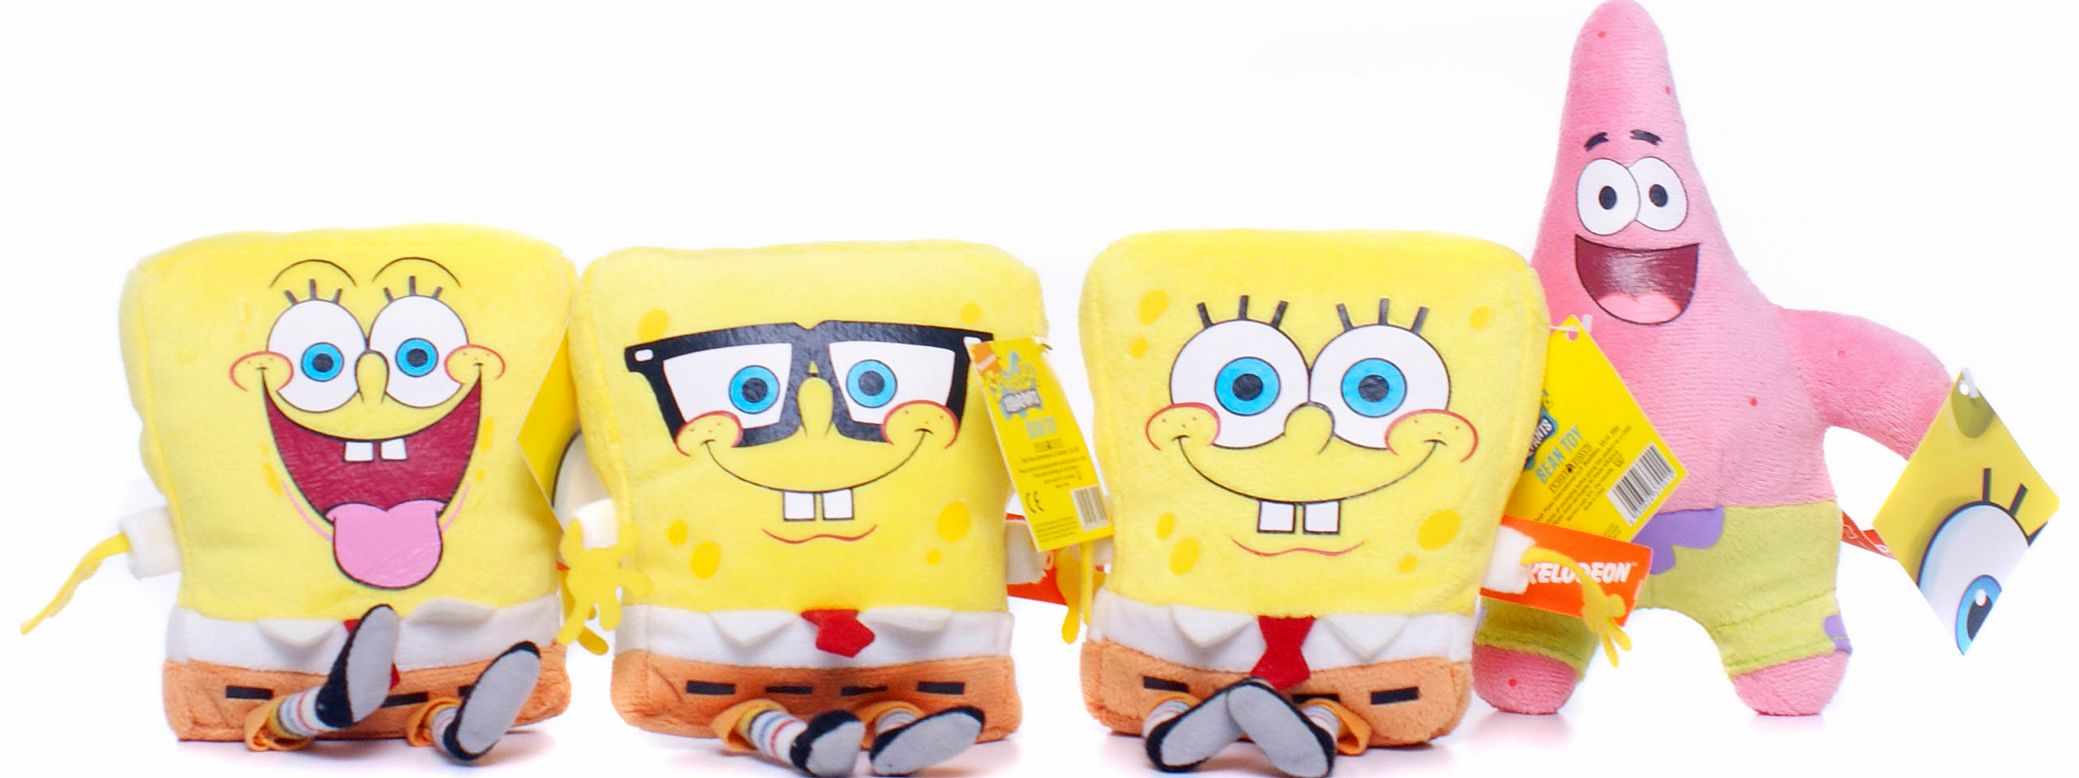 Spongebob Squarepants Soft Bean Toy - Assorted